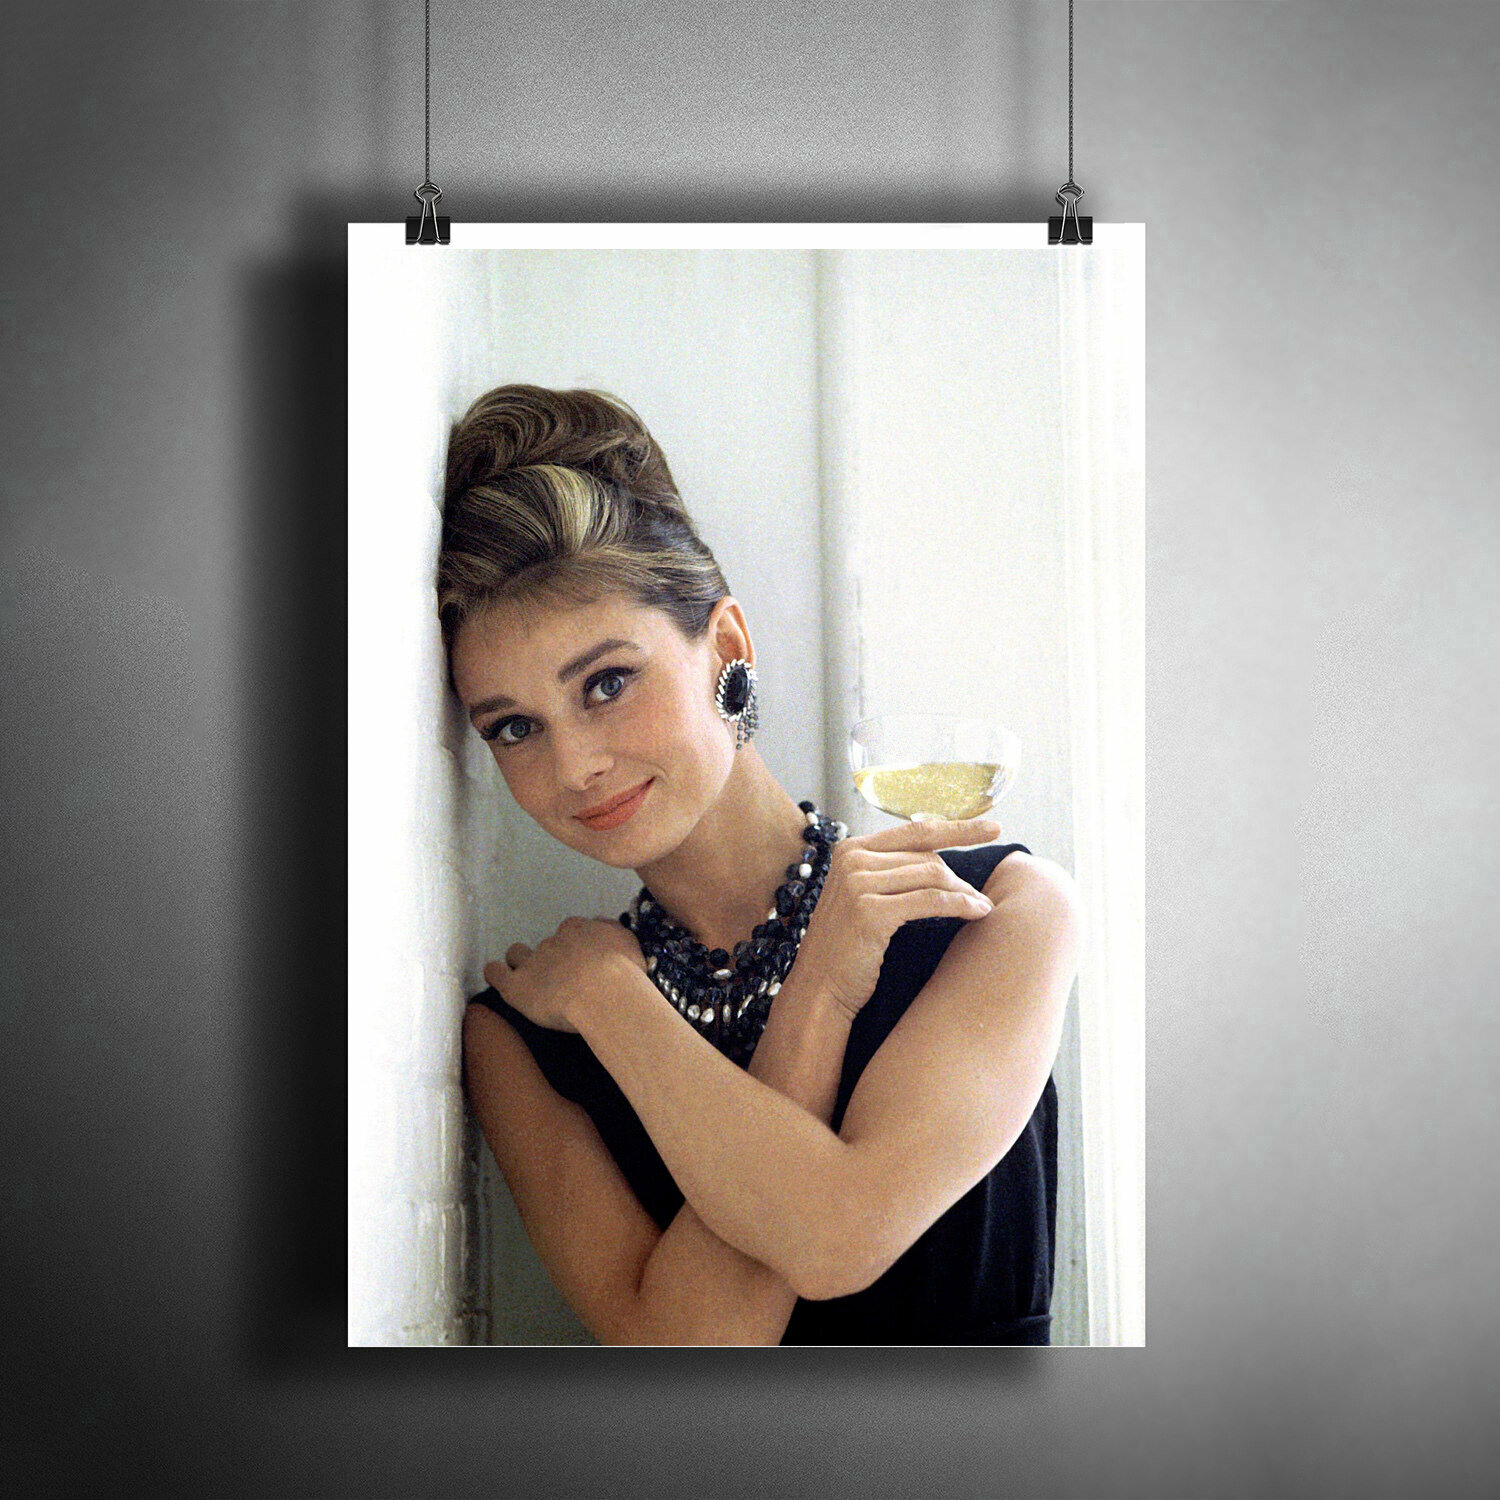 Постер плакат для интерьера "Британская актриса Одри Хепбёрн. Audrey Hepburn" / Декор дома офиса комнаты квартиры A3 (297 x 420 мм)